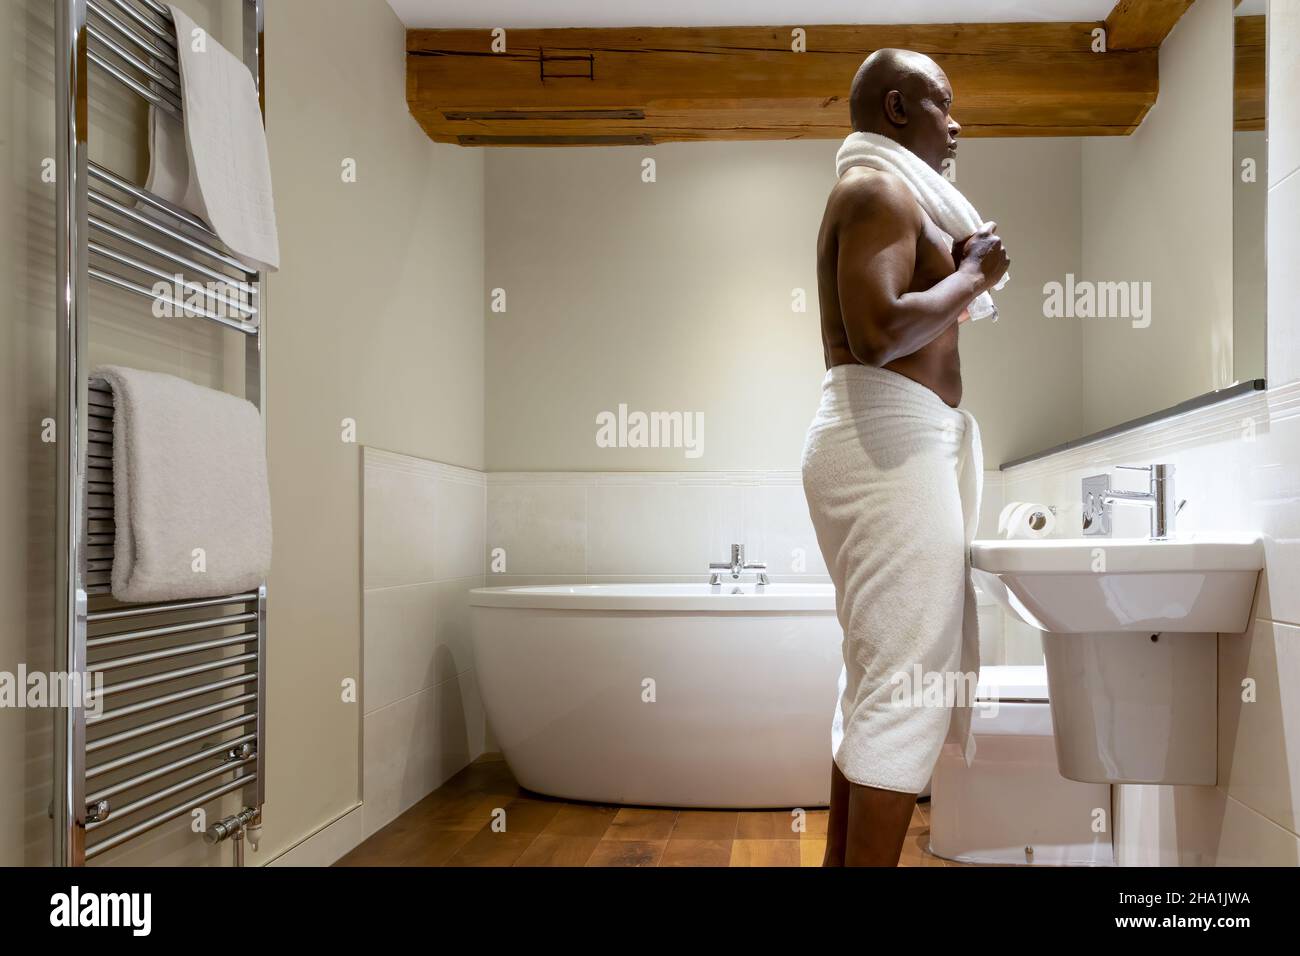 Hombre de etnia africana envuelto en una toalla, en un baño moderno Foto de stock